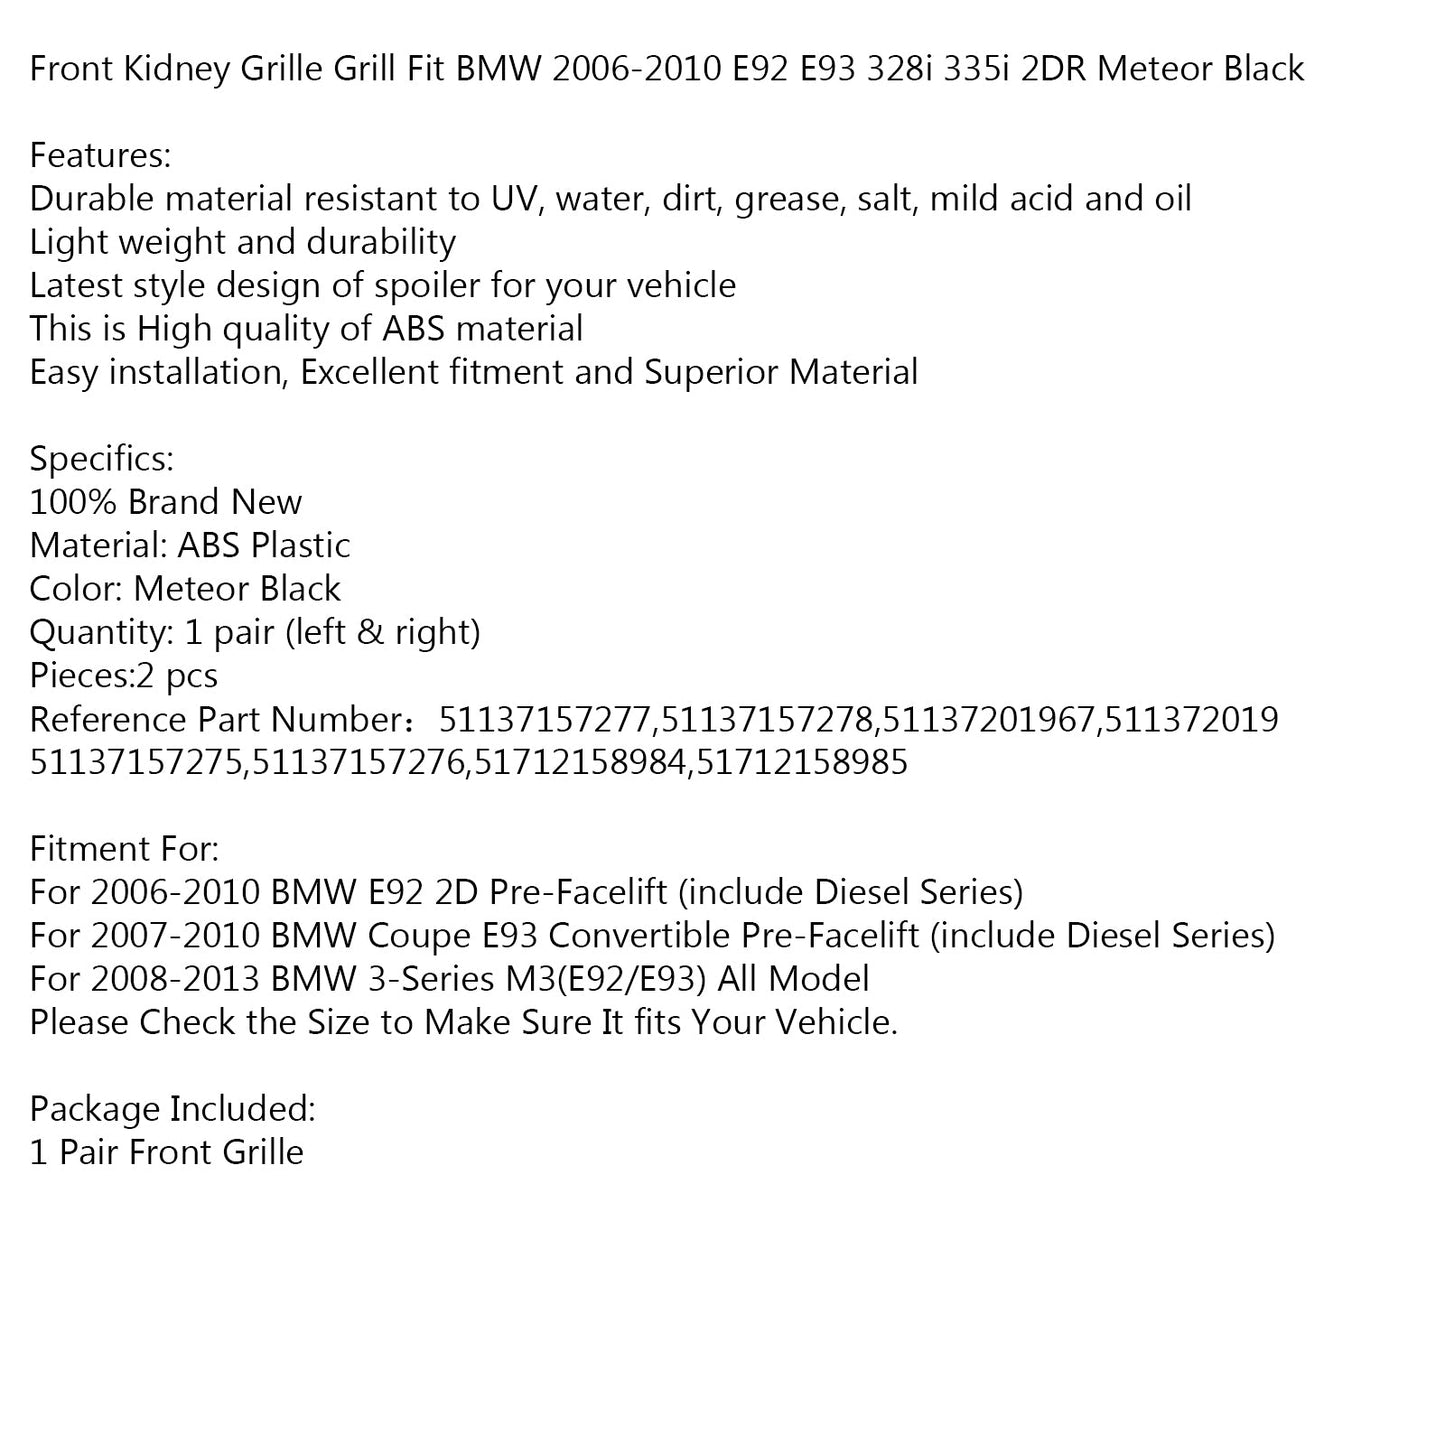 Front Kidney Grille Grill Fit BMW 2007-2010 E92 E93 328i 335i 2DR Meteor Black